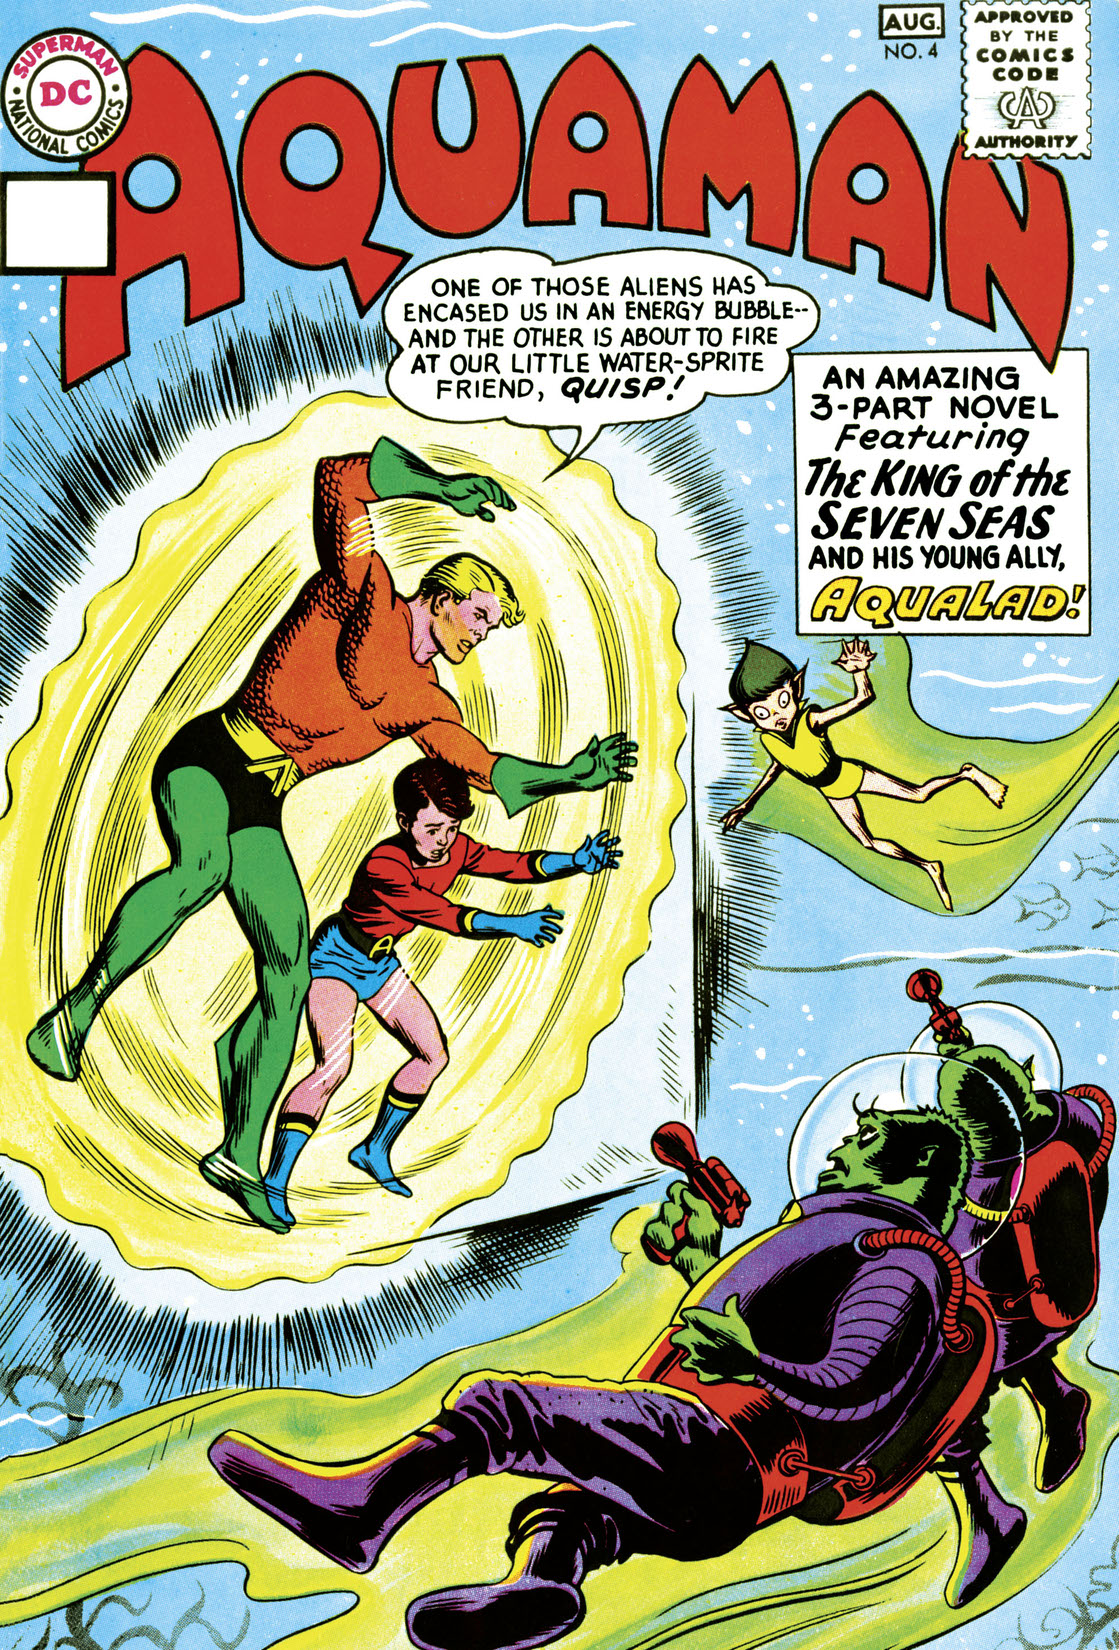 Aquaman (1962-) #4 preview images